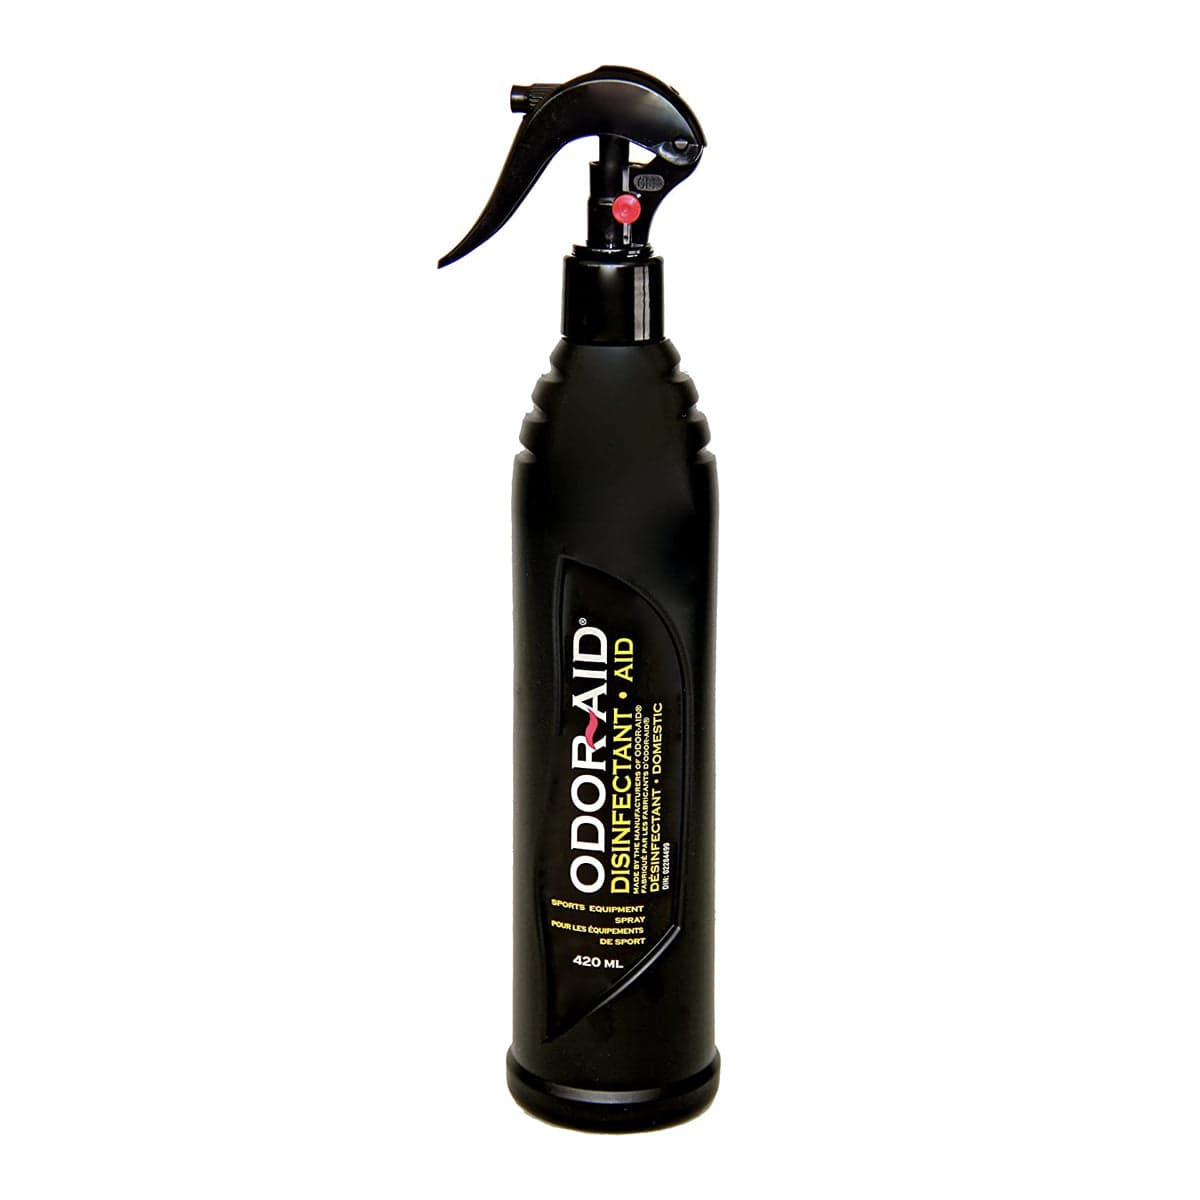 Odor Aid Deodorizer Spray - The Hockey Shop Source For Sports